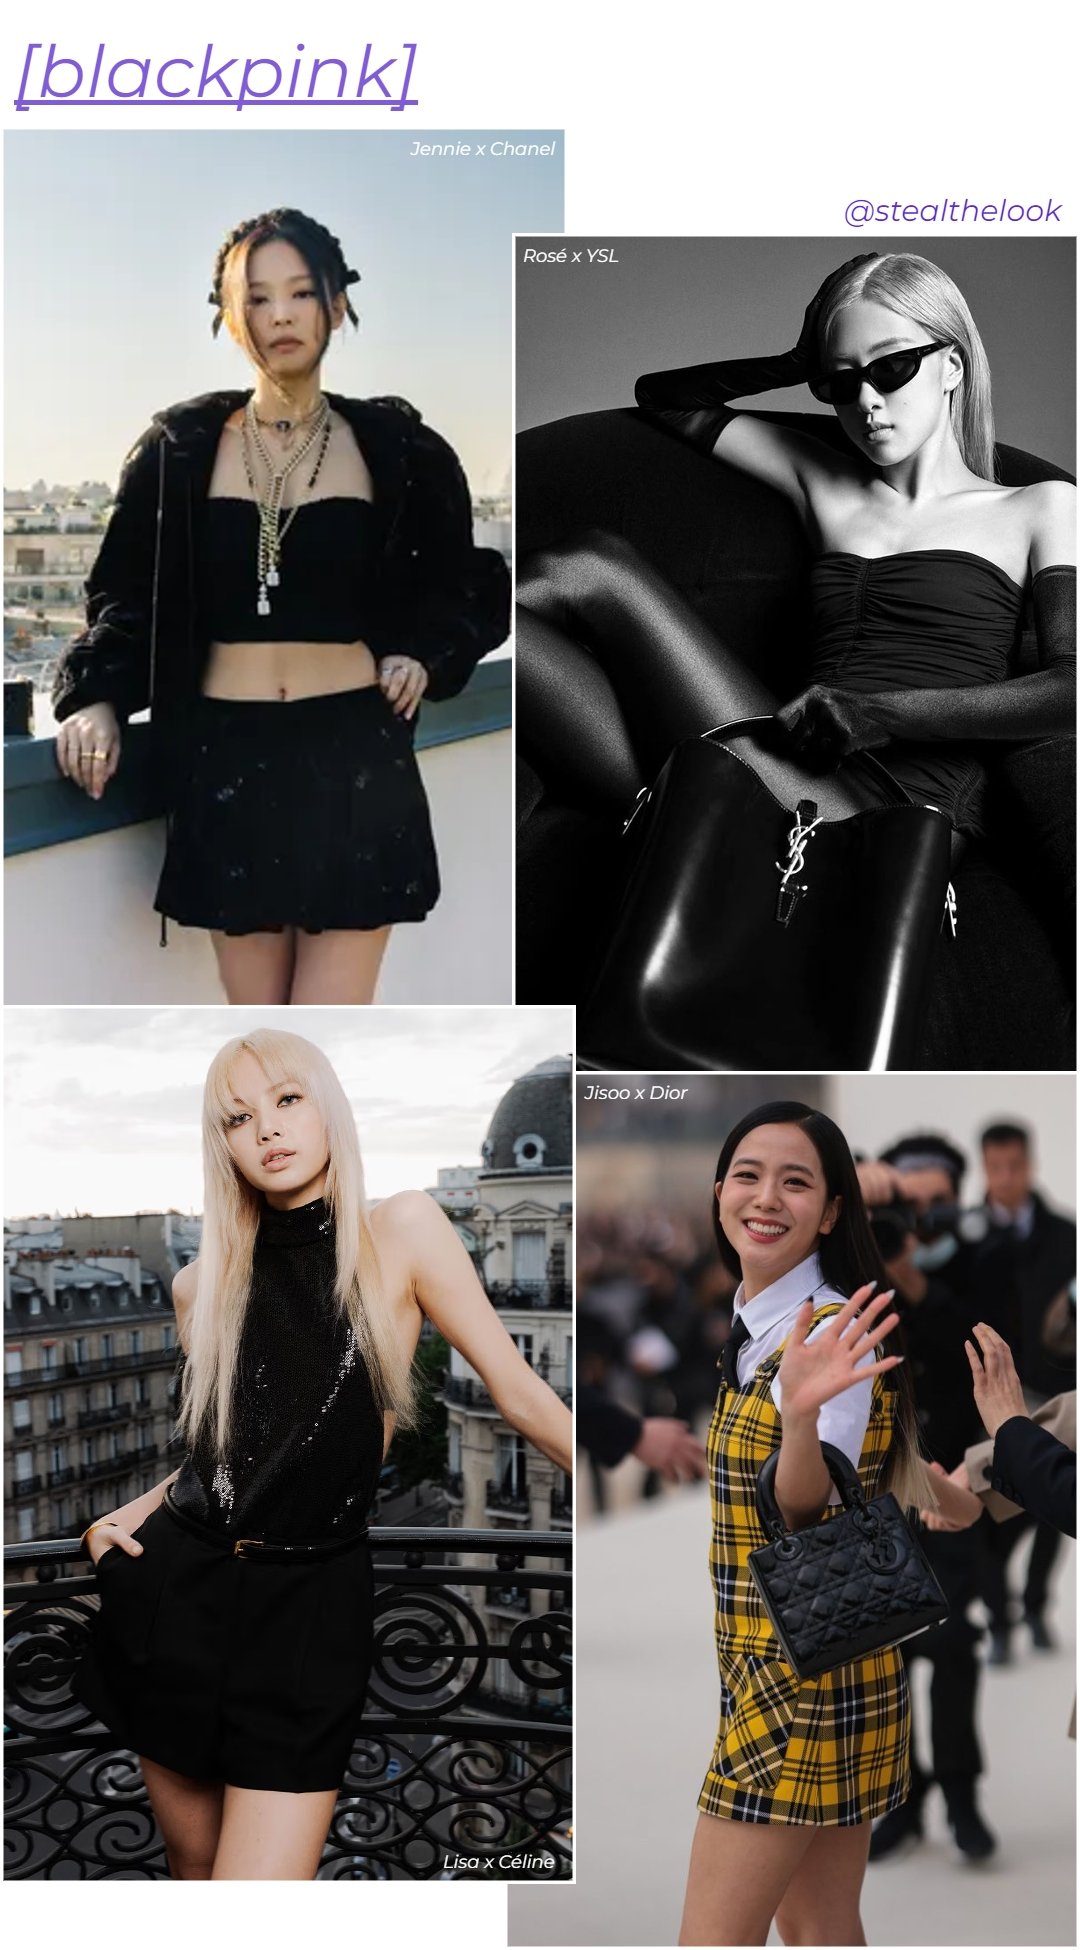 Blackpink - roupas diversas - K-pop - outono - colagem de imagens - https://stealthelook.com.br